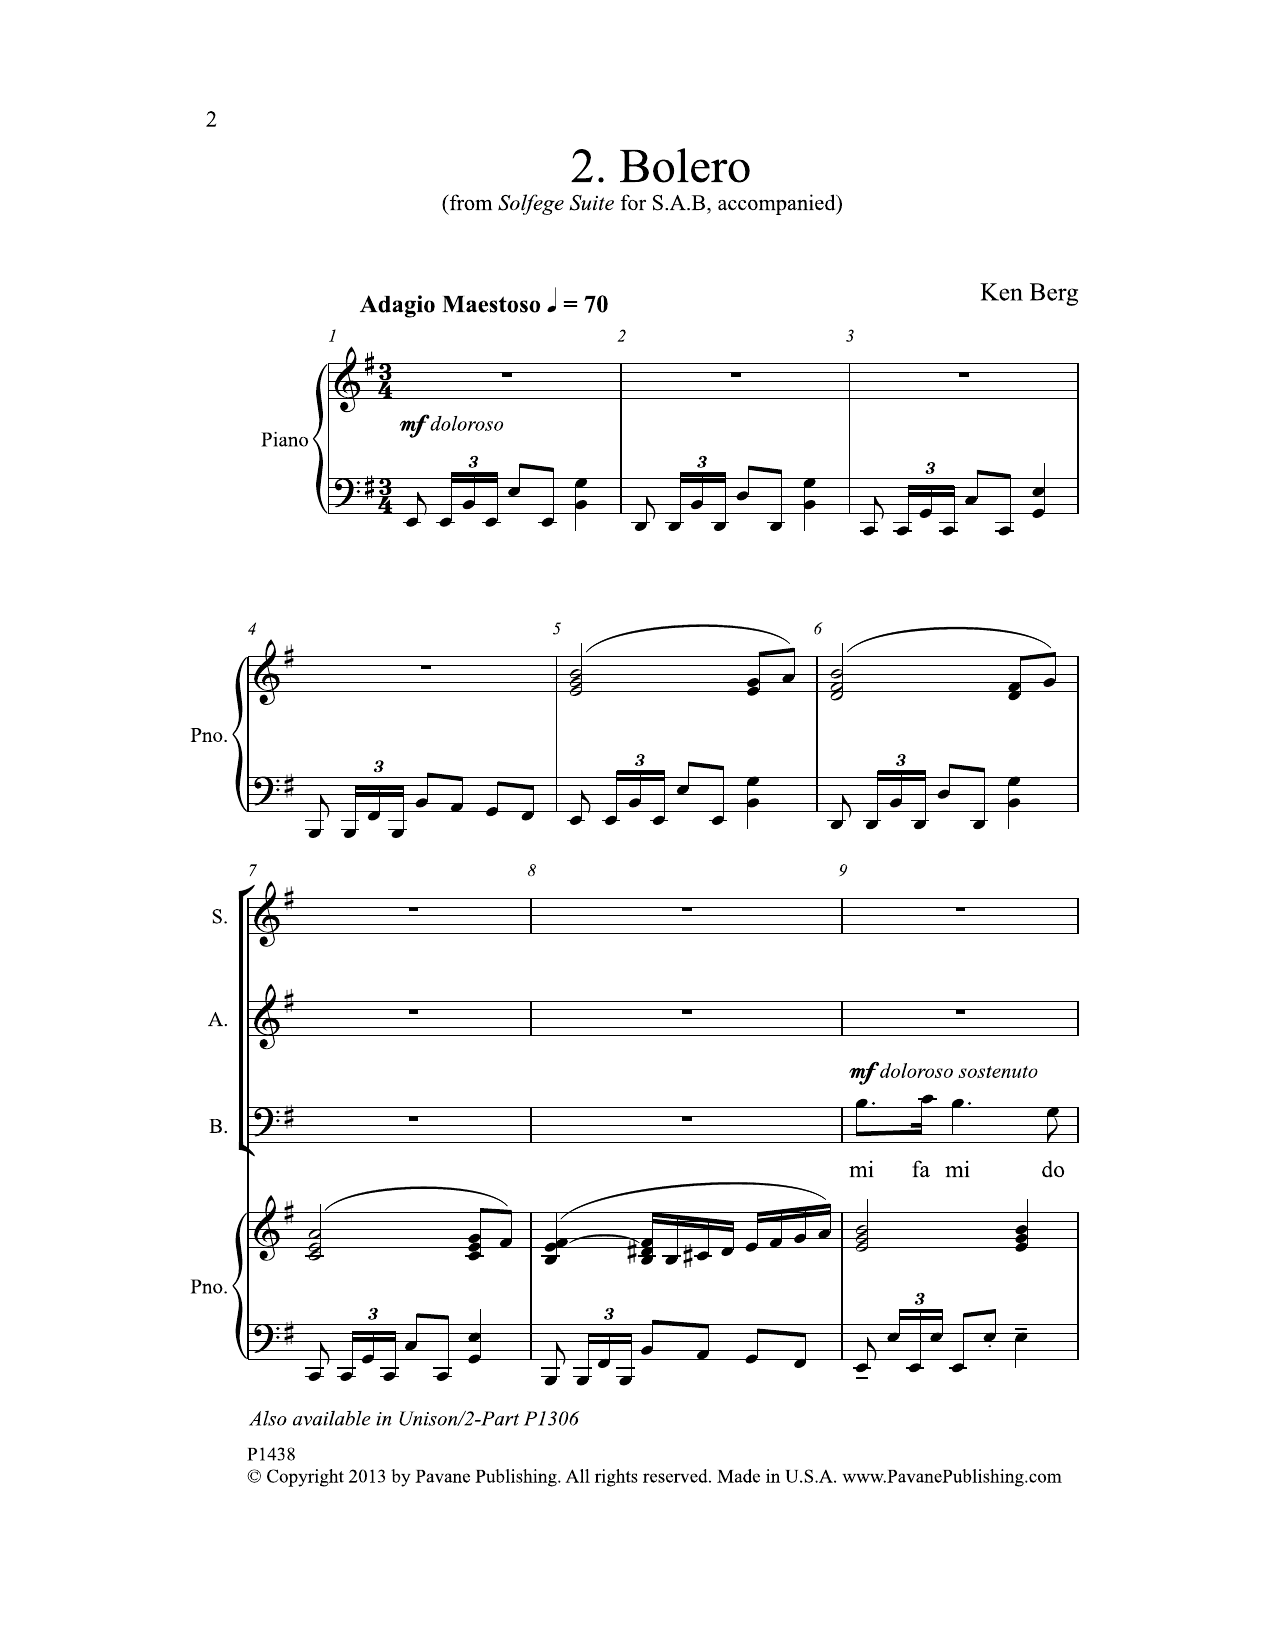 Download Ken Berg Bolero Sheet Music and learn how to play SAB Choir PDF digital score in minutes